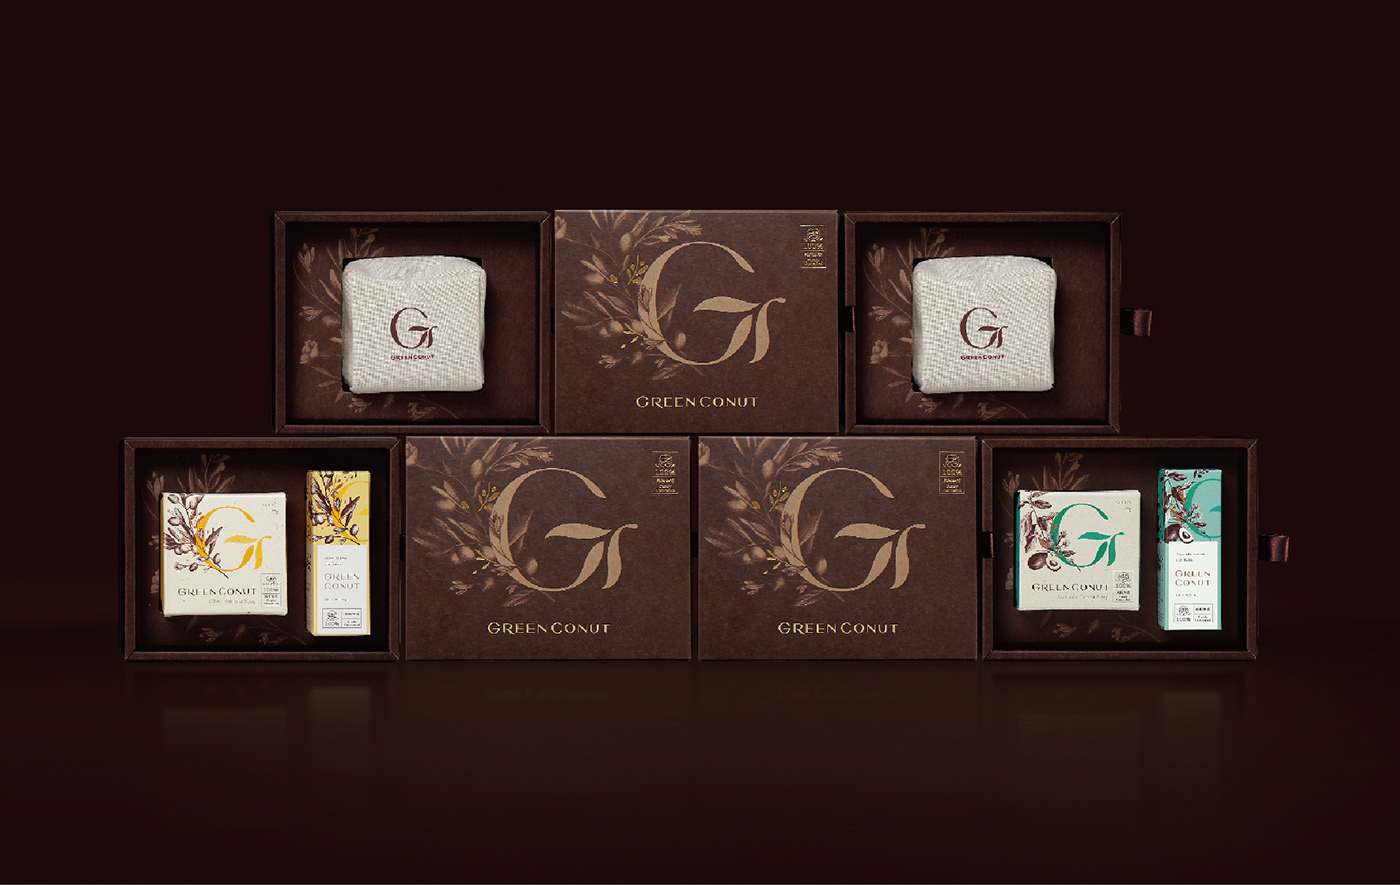 GREEN CONUT taiwan taiwan design SUMP DESIGN brand identity design packaging design